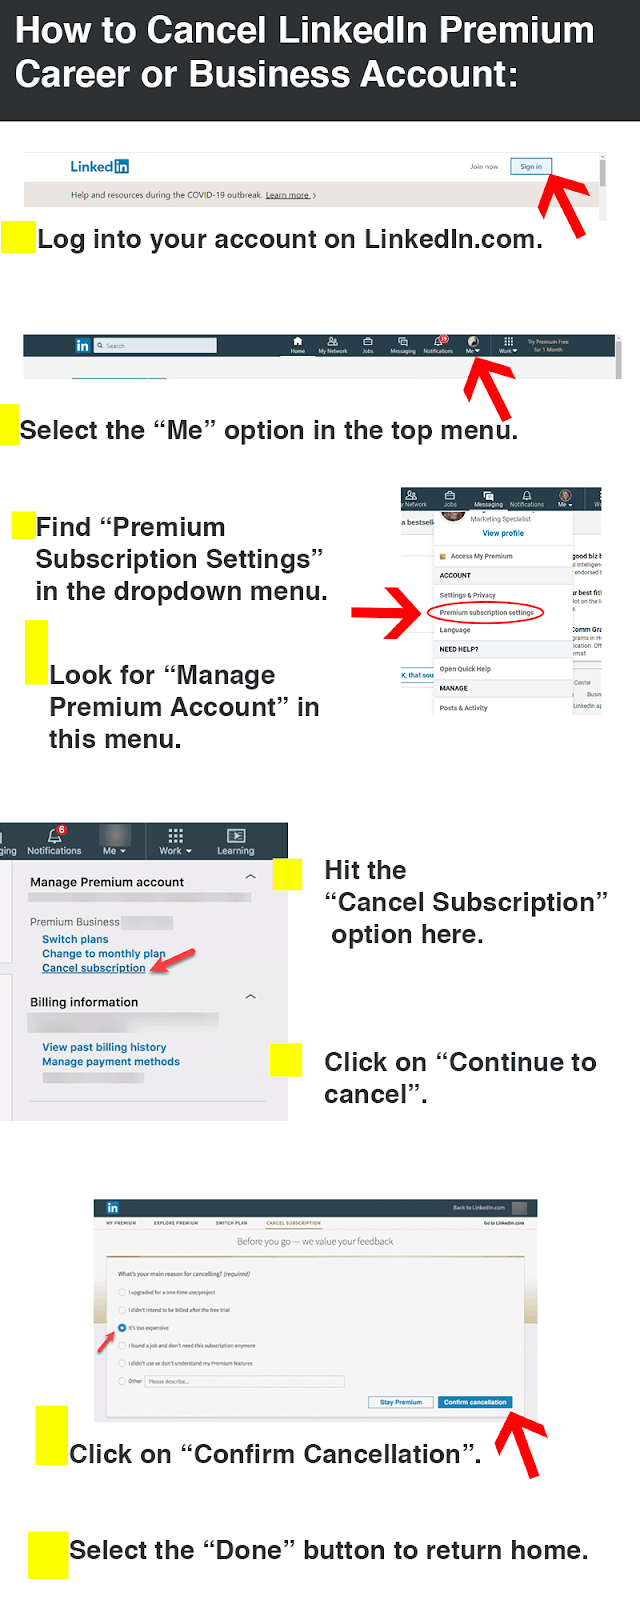 How to cancel LinkedIn Premium